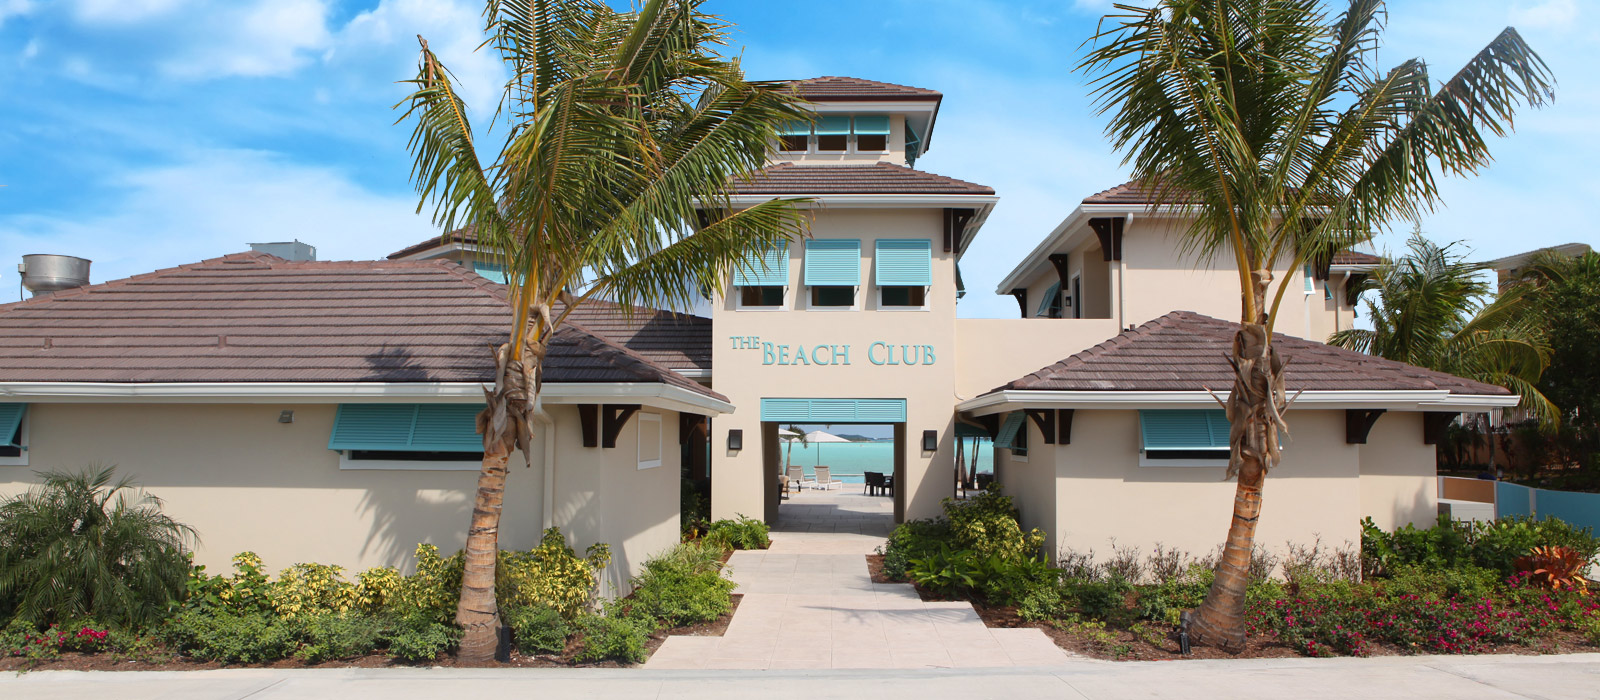 The Beach Club February Point